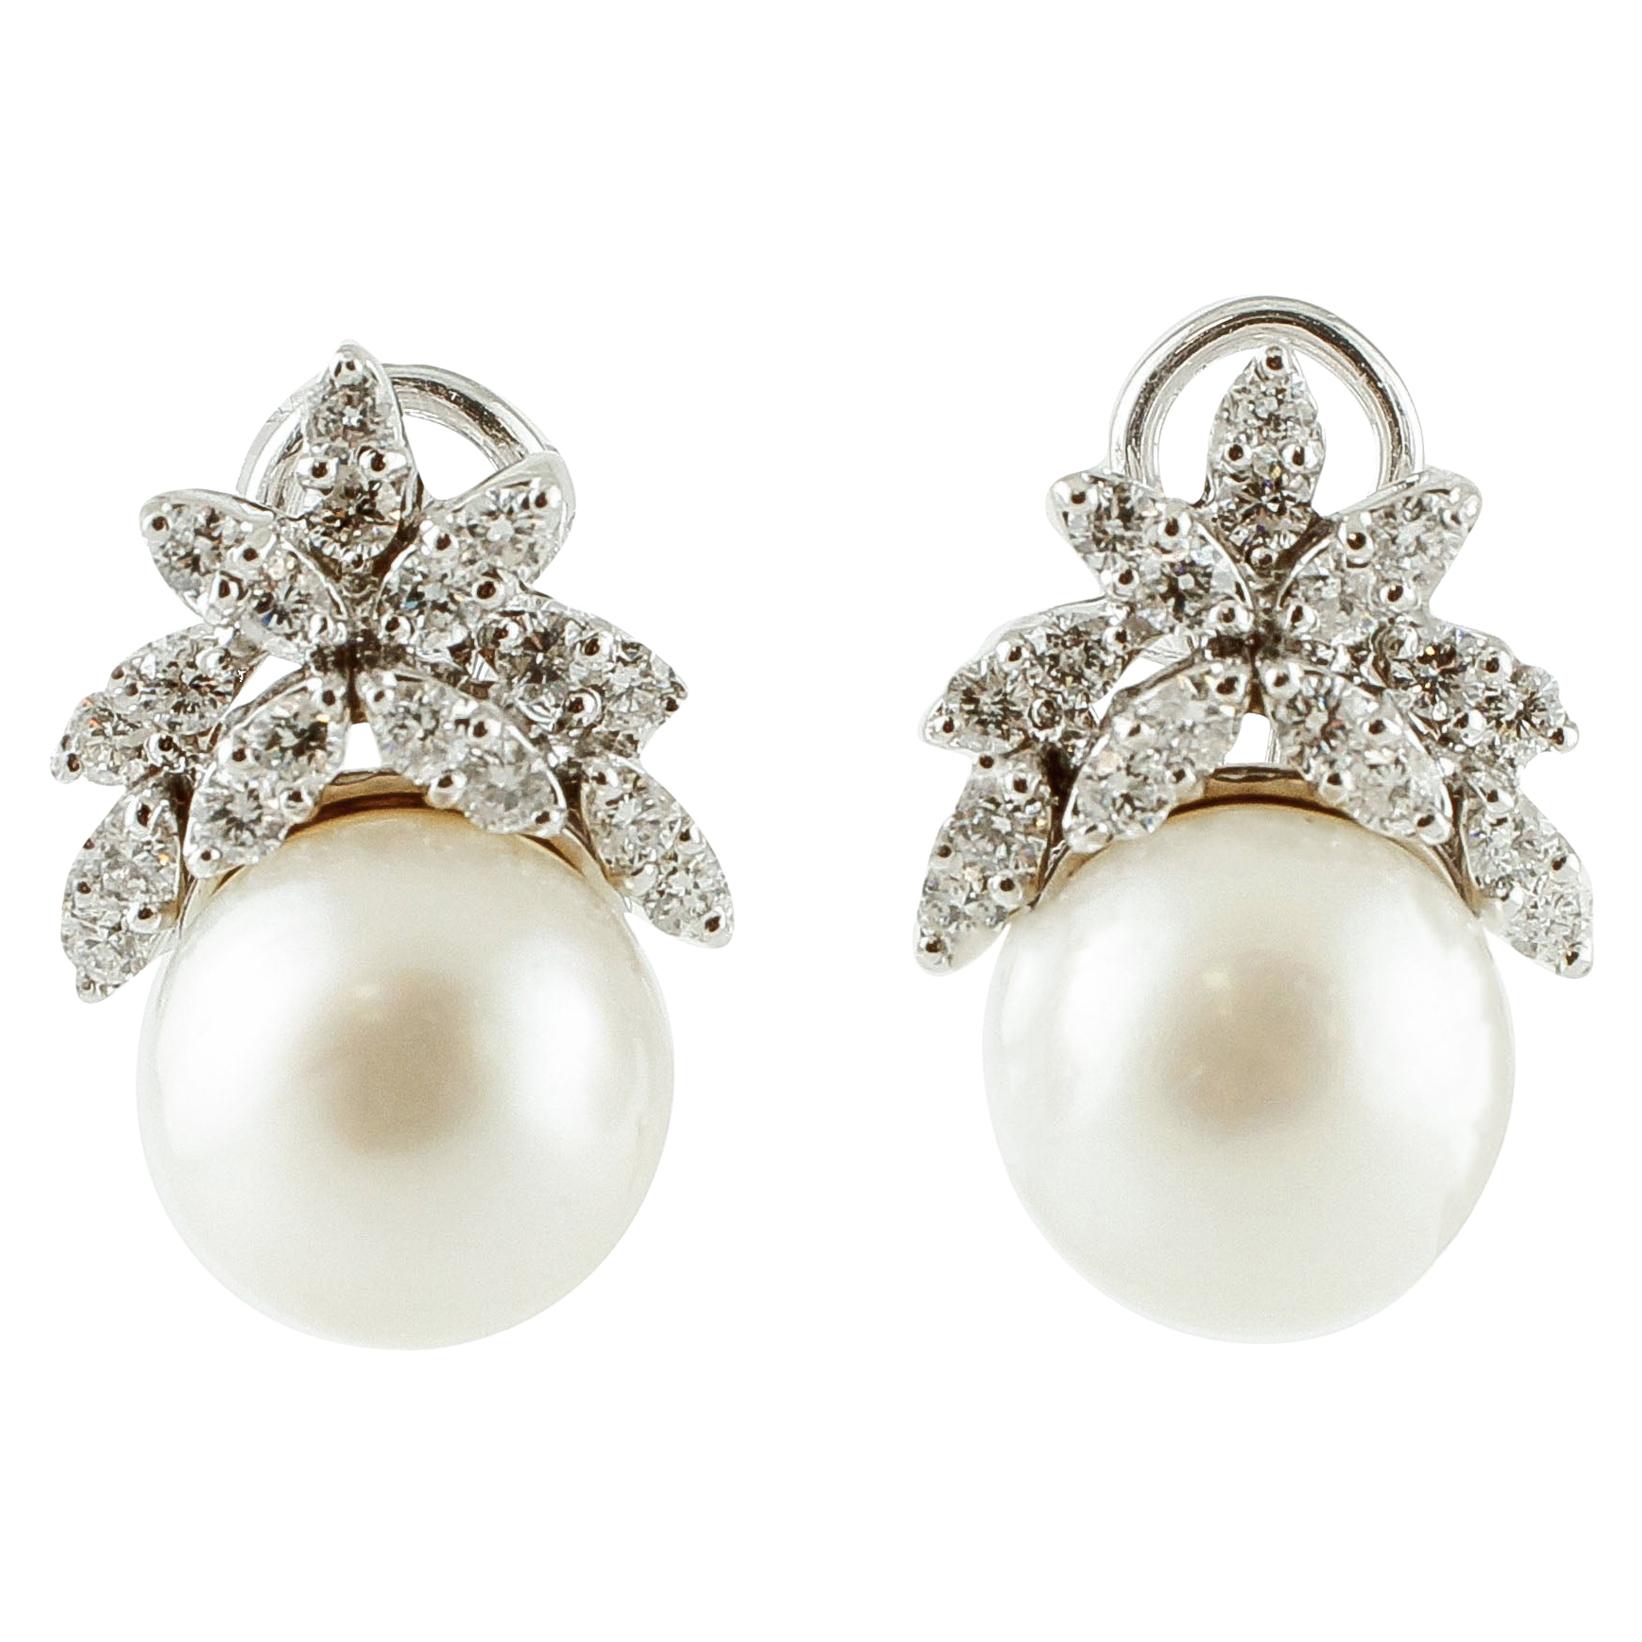 Diamonds, South Sea Pearls, 18 Karat White Gold Earrings